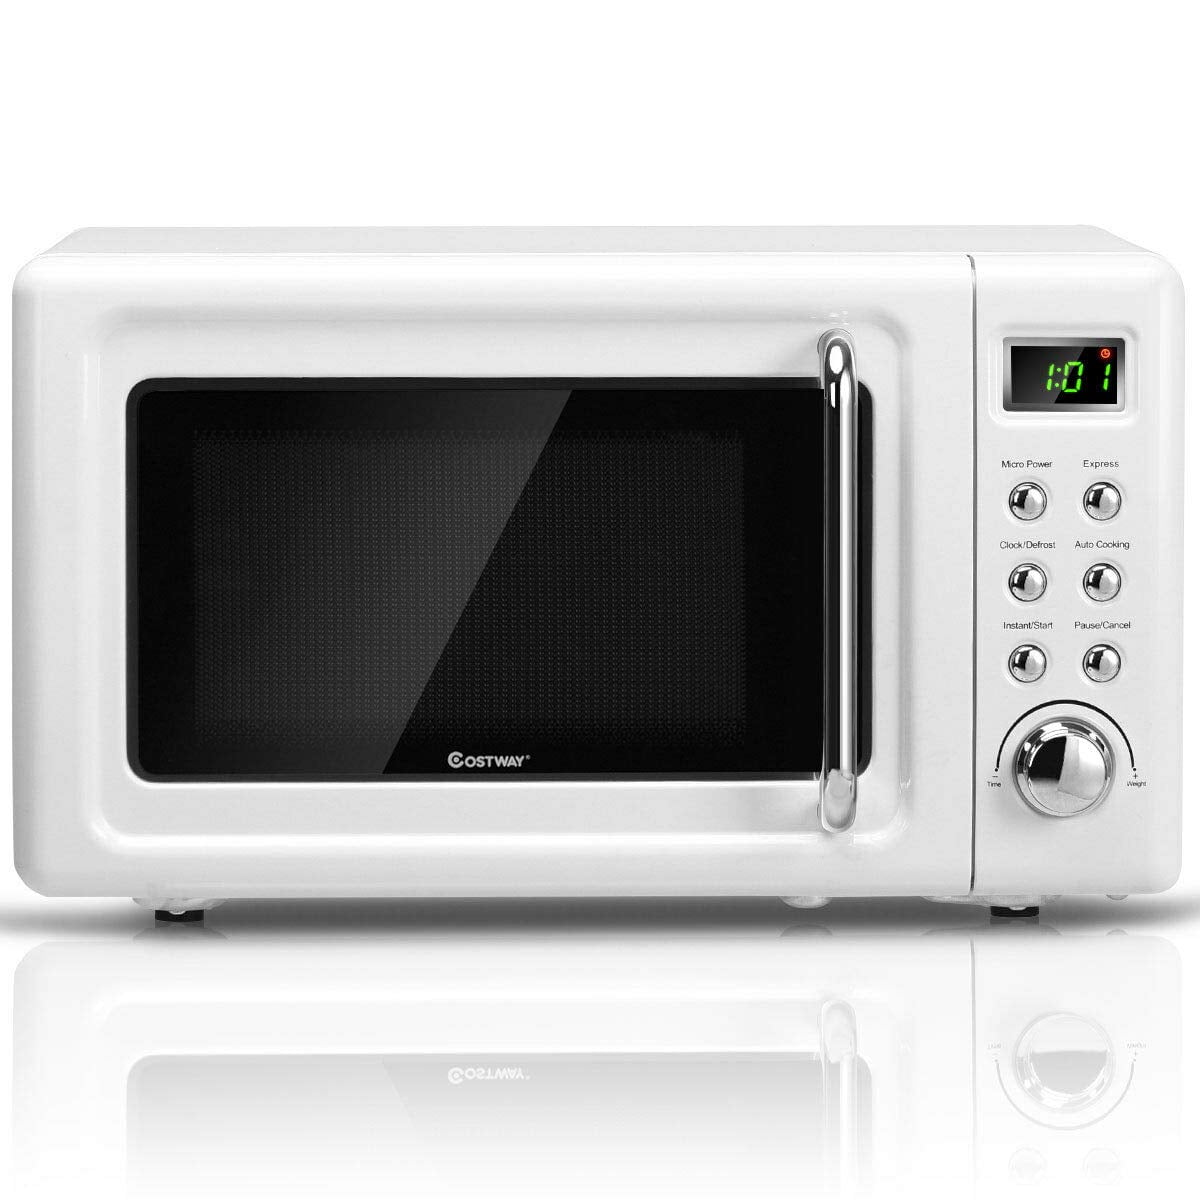 ft 0.9 cu Nostalgia RMO4AQ Retro 800-Watt Countertop Microwave Oven Aqua